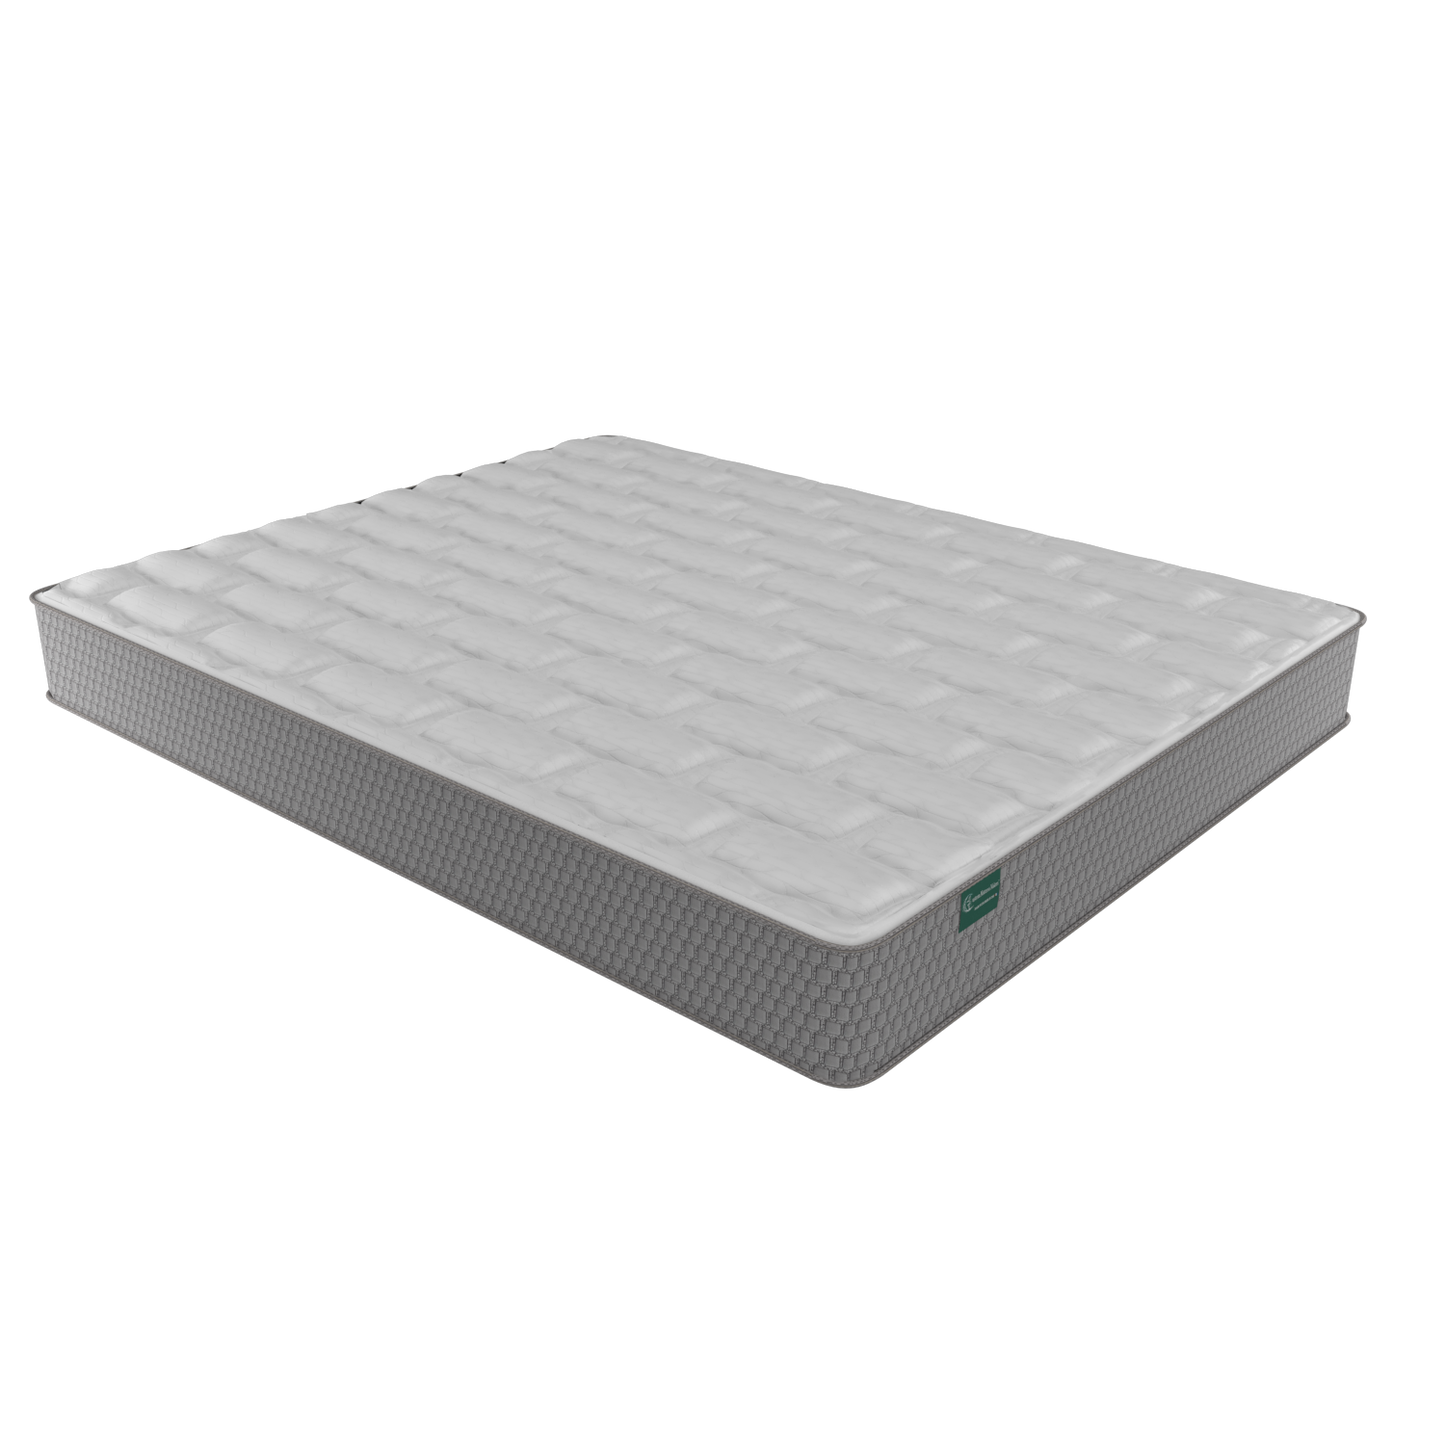 Clearwater, 40" x 71" mattress